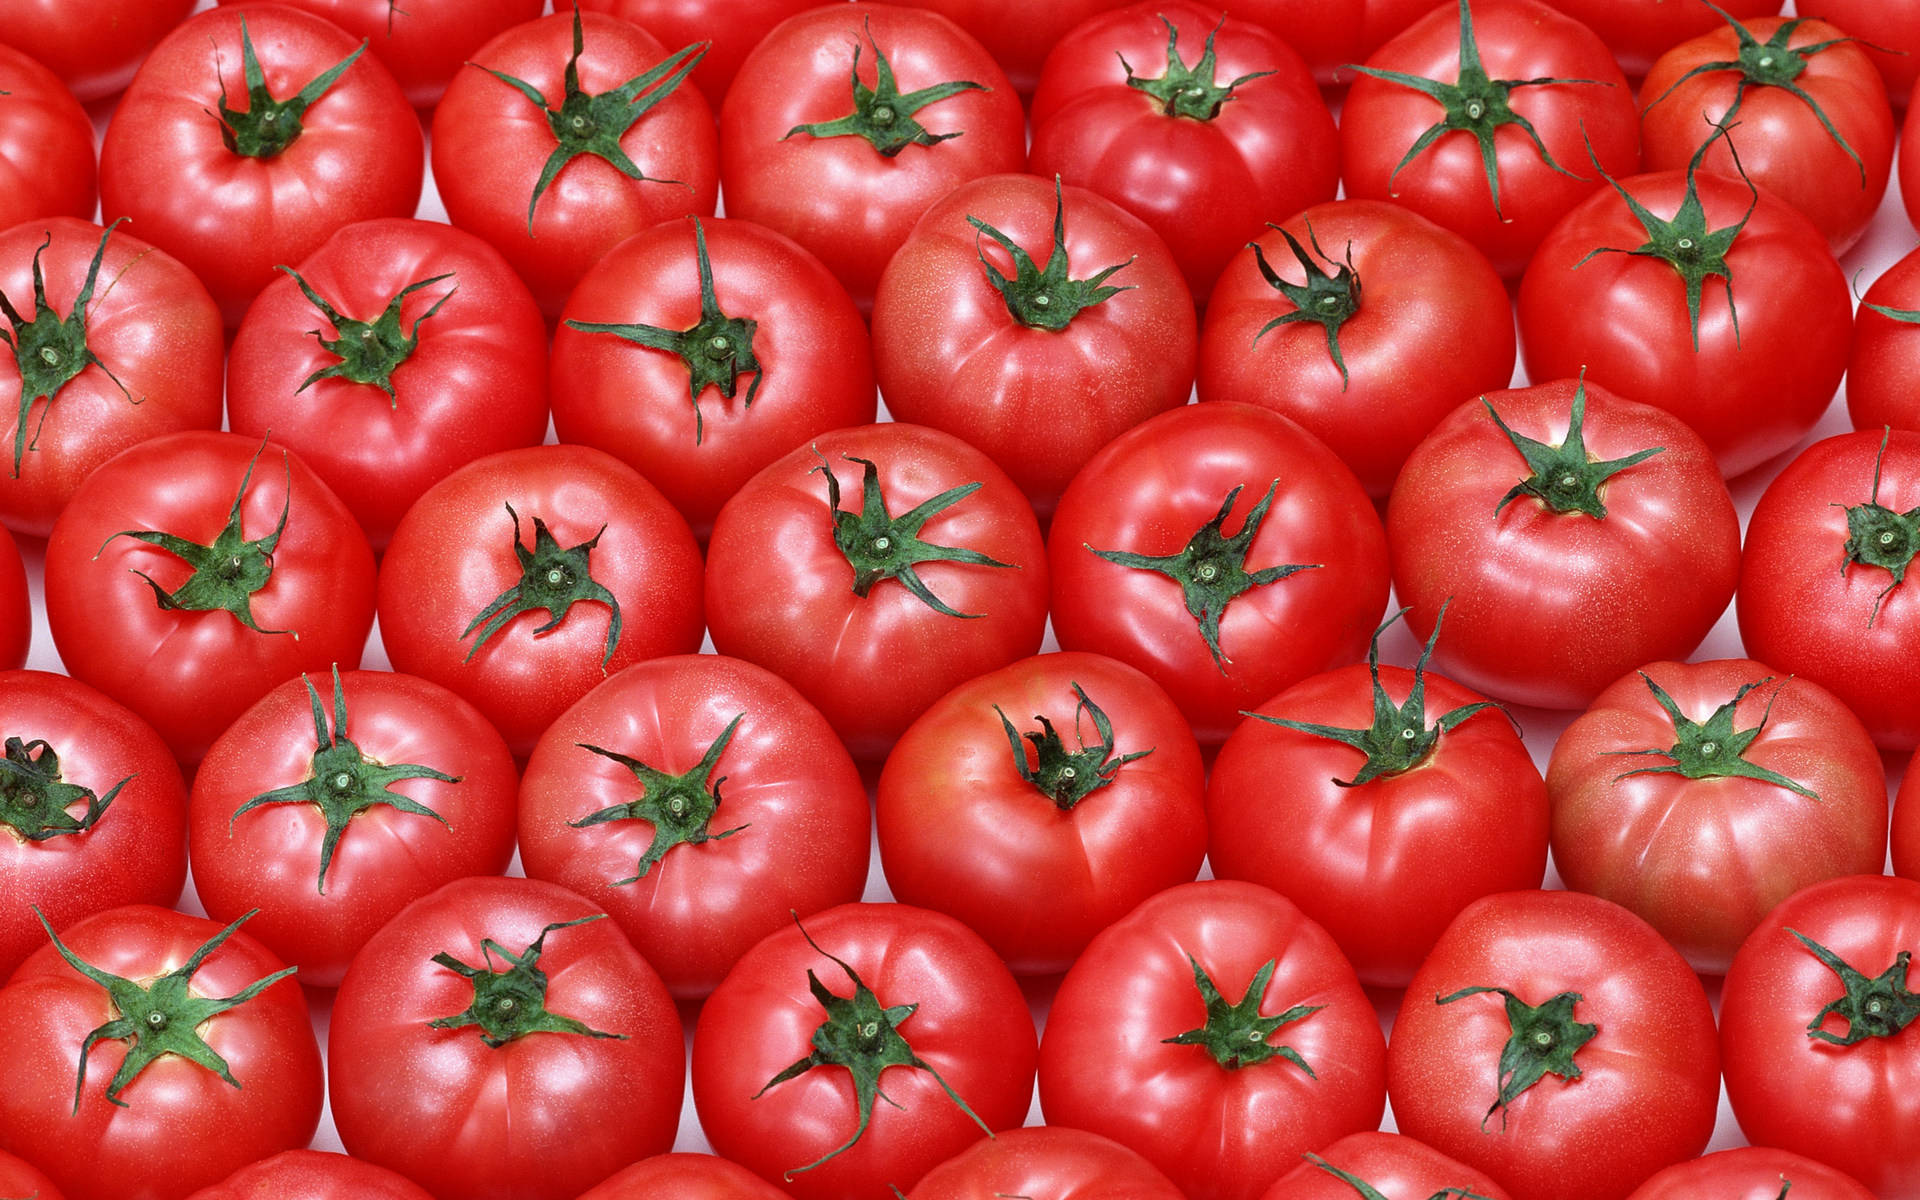 Medium Sized Tomato Fruits Background Wallpaper